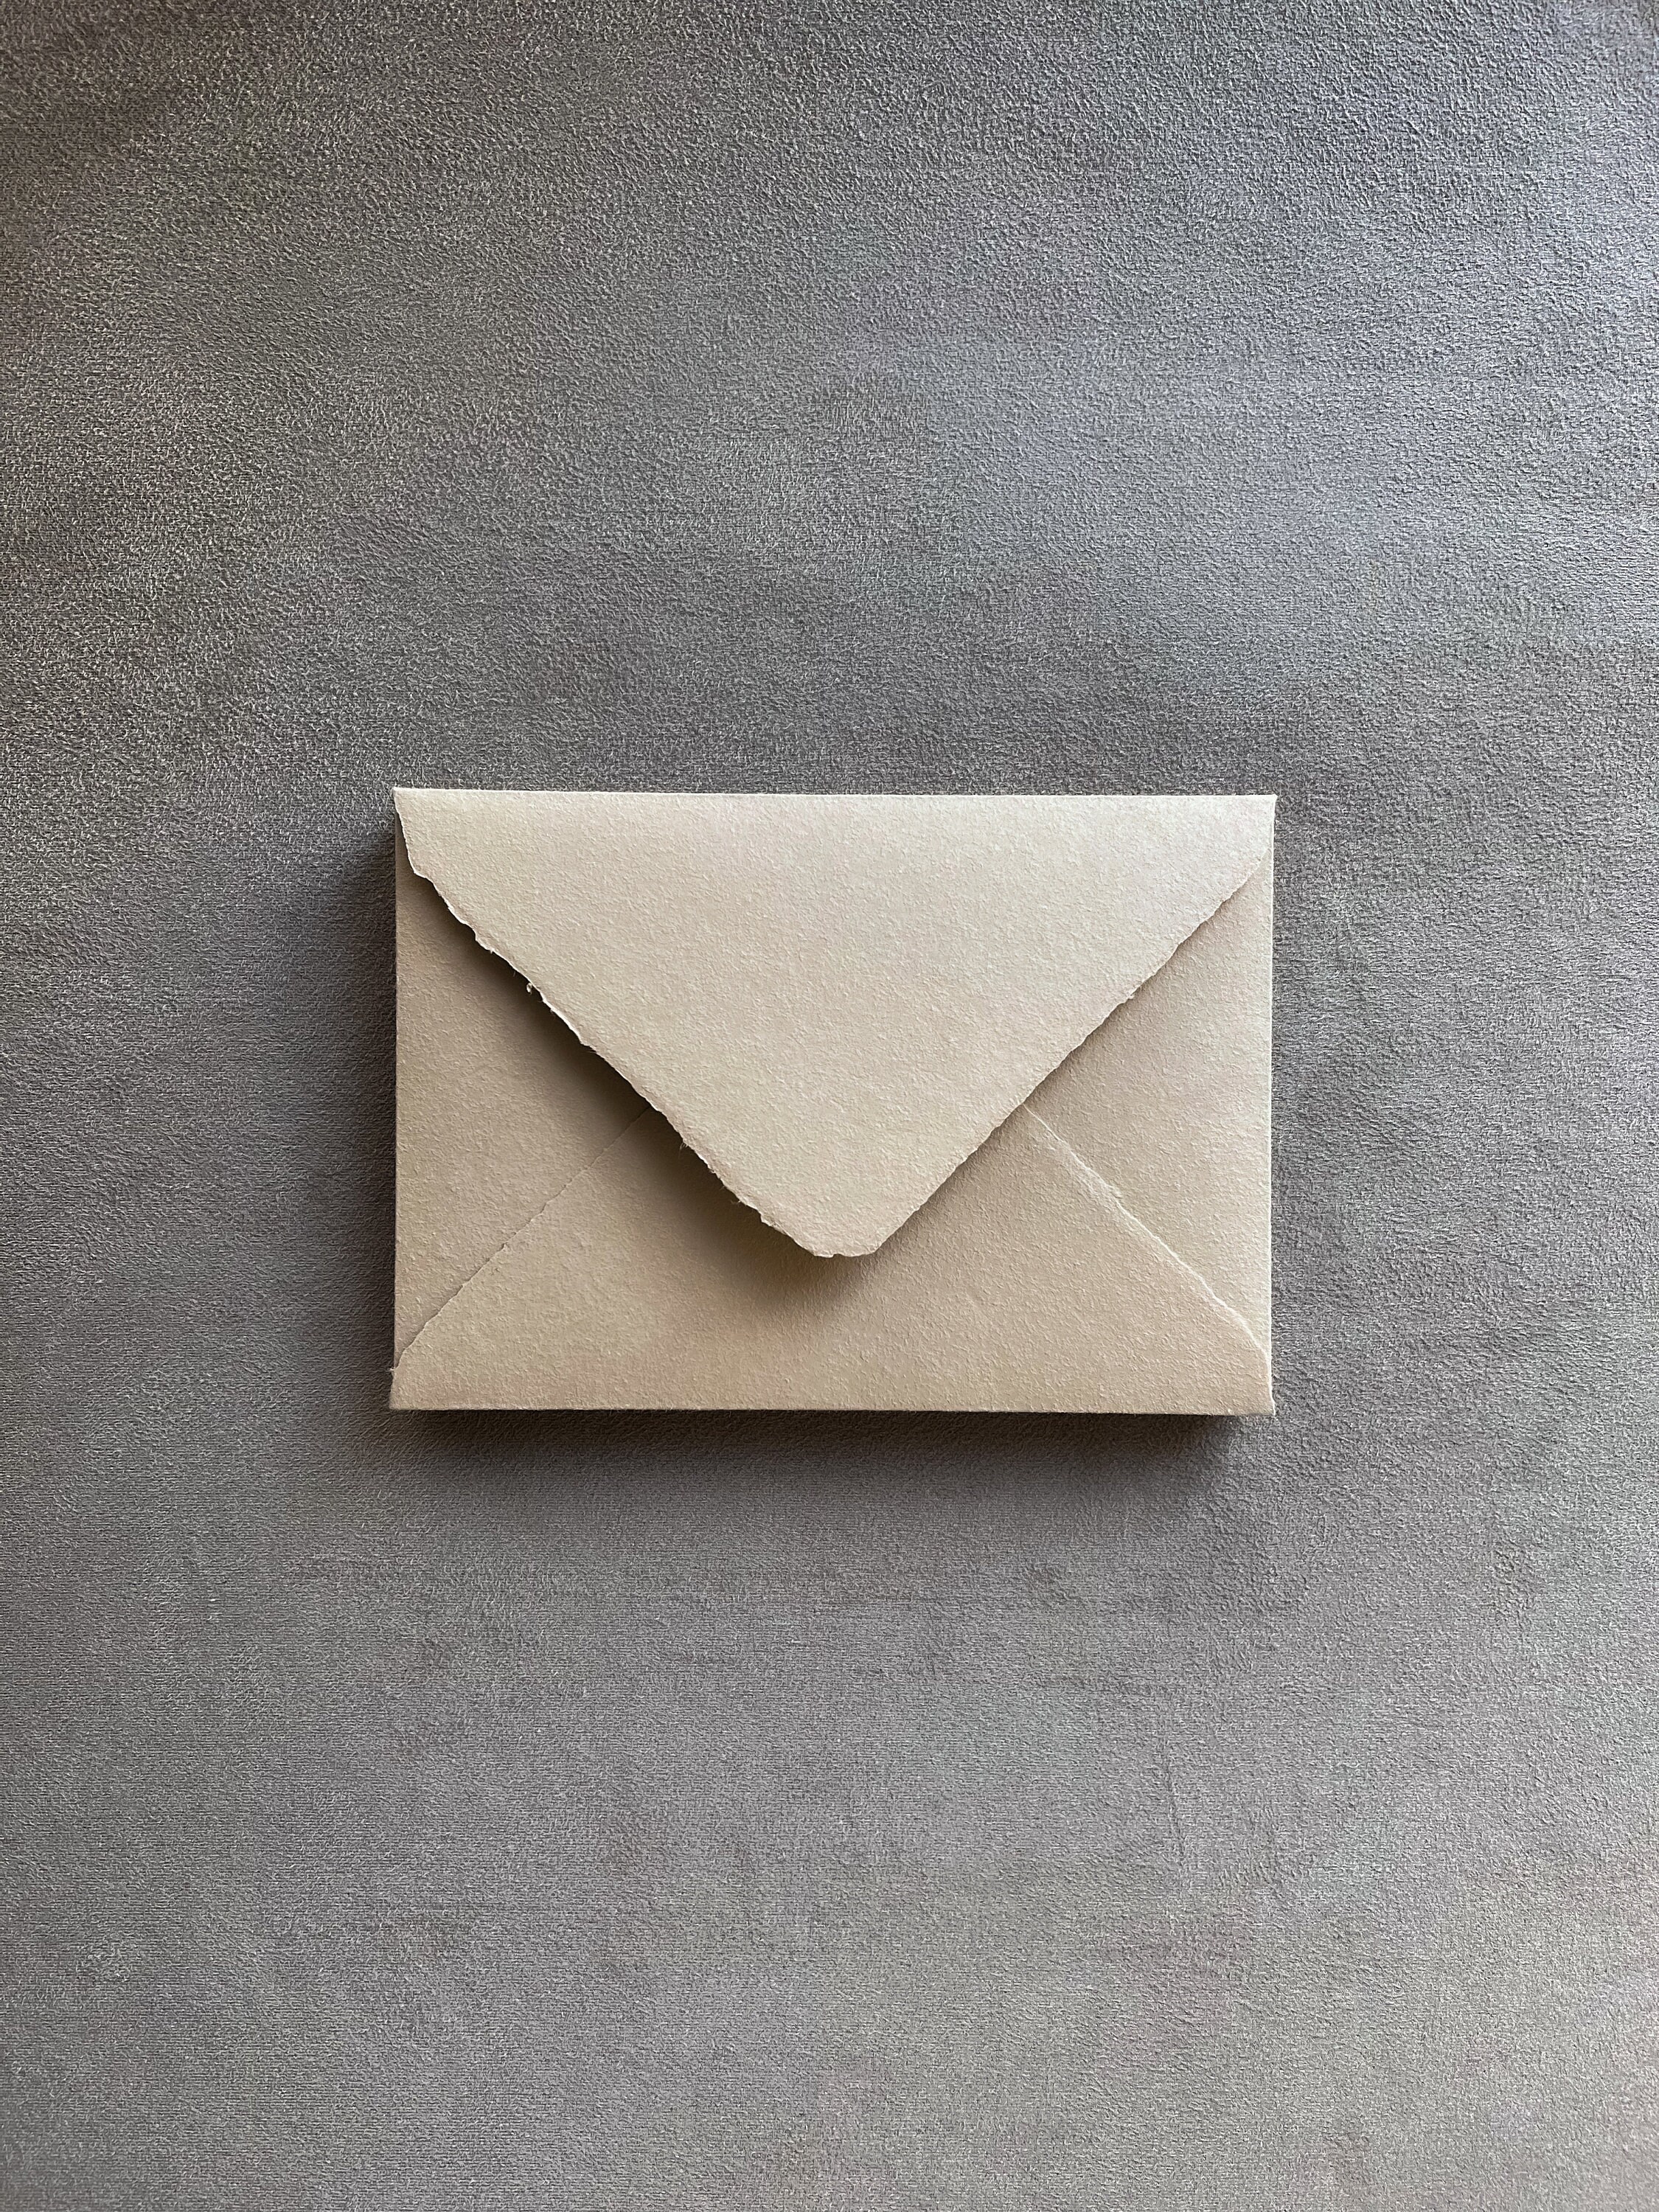 Enveloppe recyclée, dimension enveloppes 16x16 cm, 120 gr, naturel